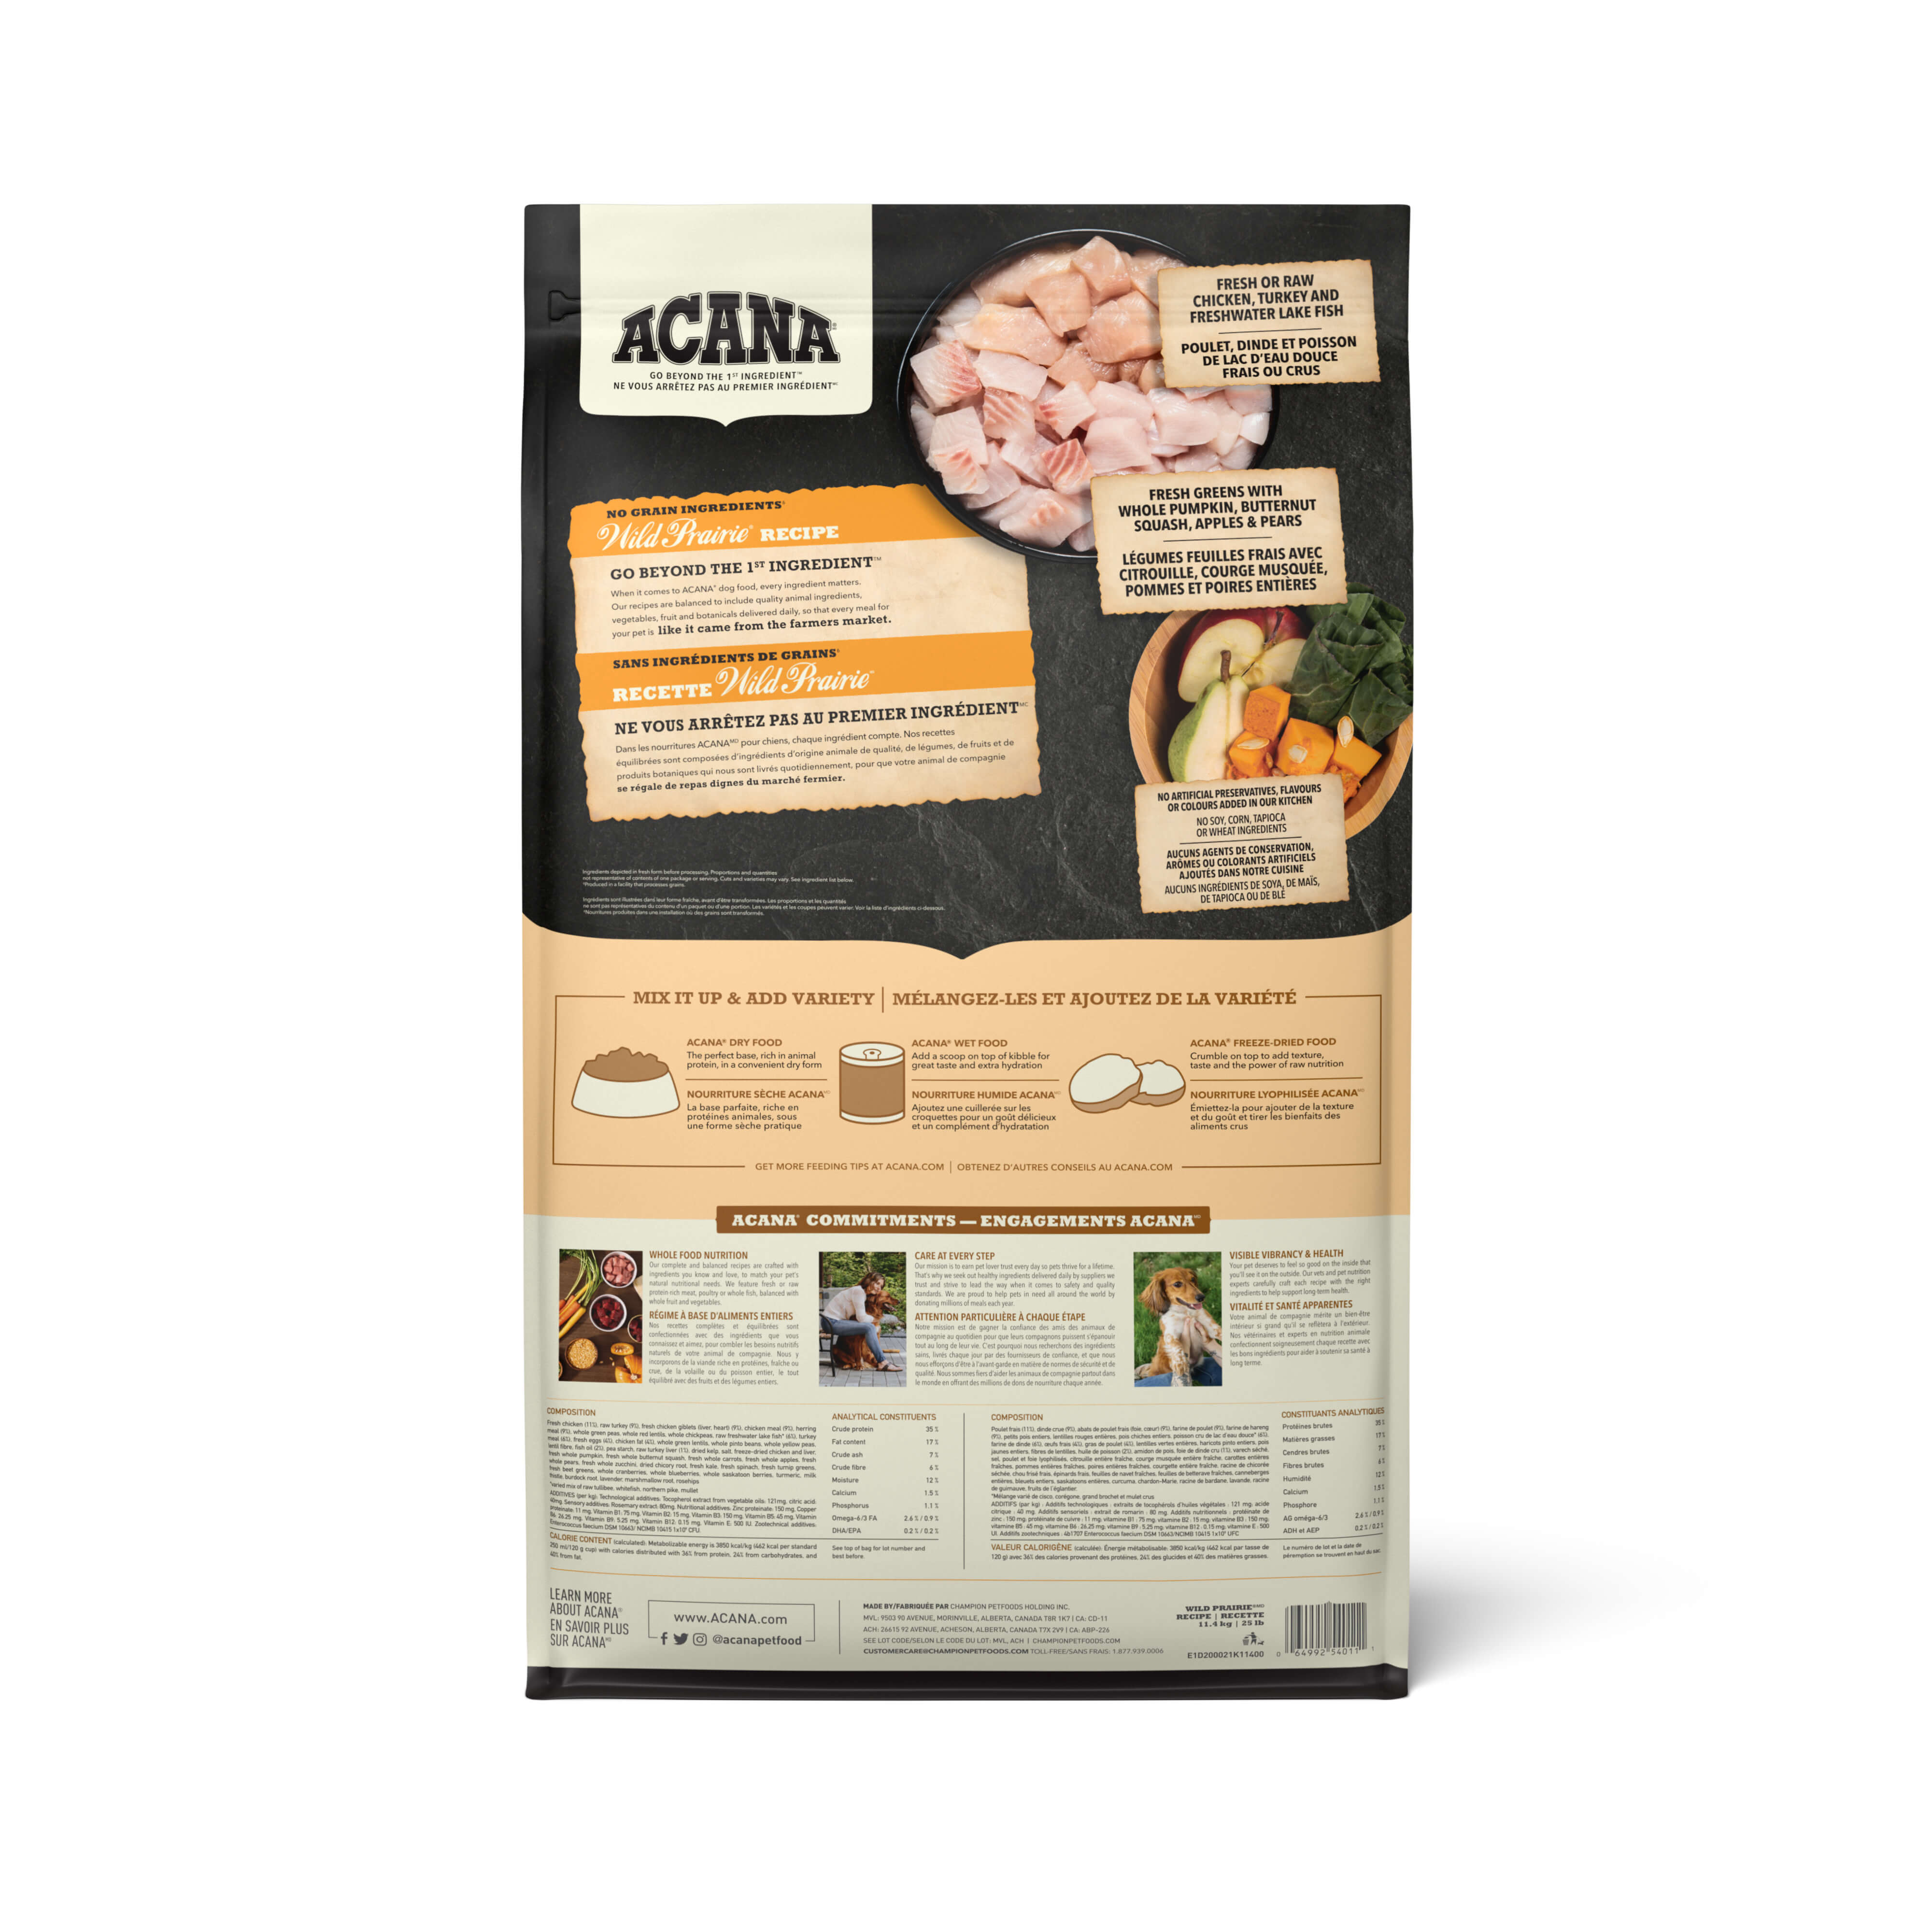 Acana - Highest Protein - Wild Prairie (Dry Dog Food)